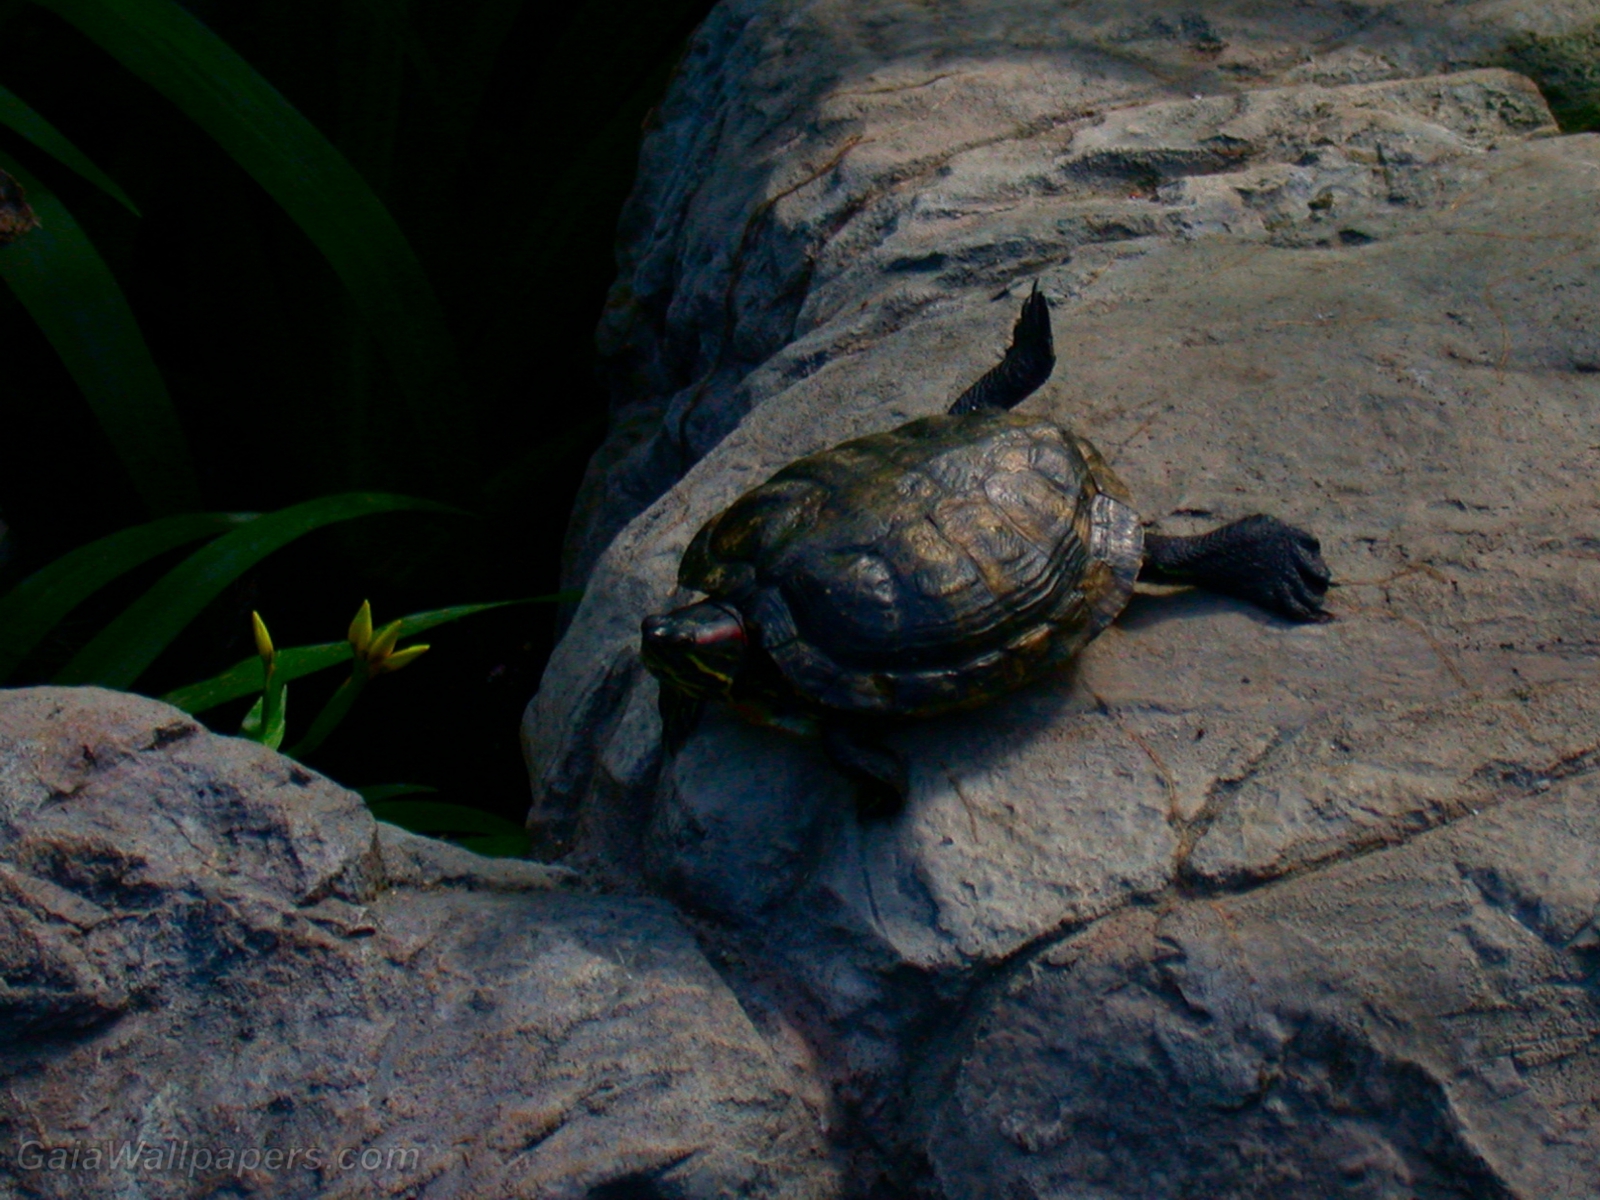 Red-eared slider turtle lying under the sun - Free desktop wallpapers